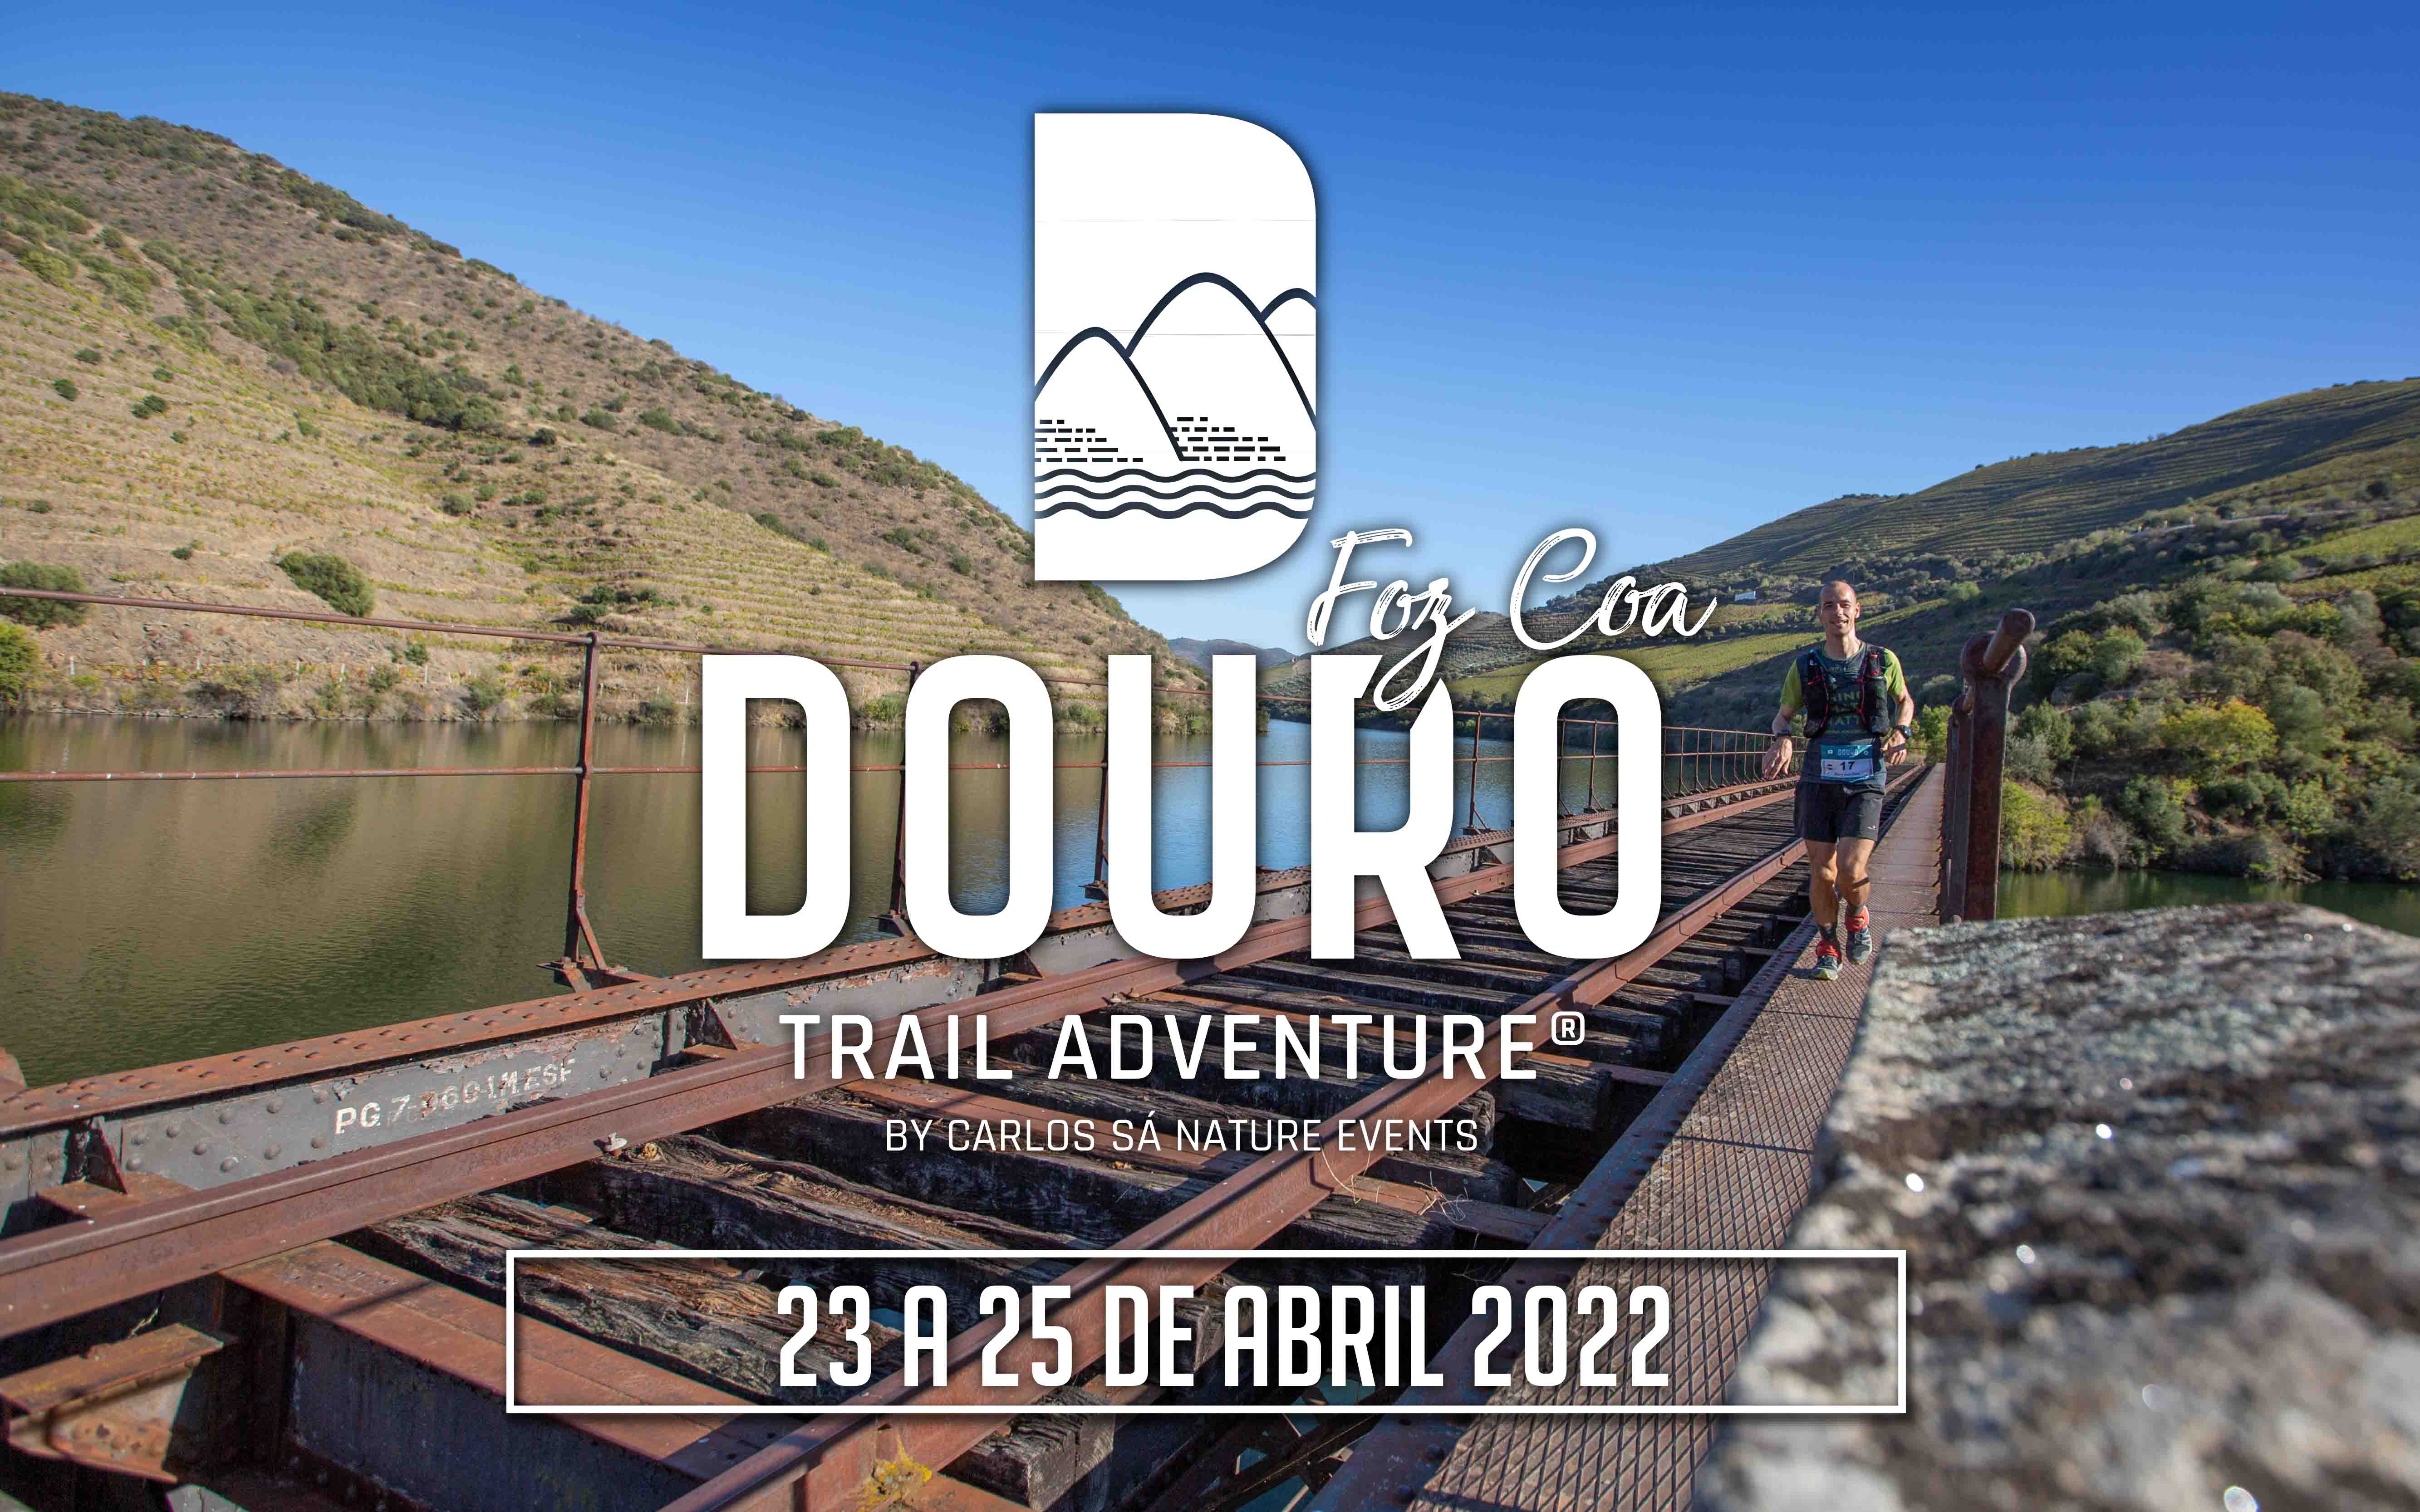 Foz Côa Douro Trail Adventure